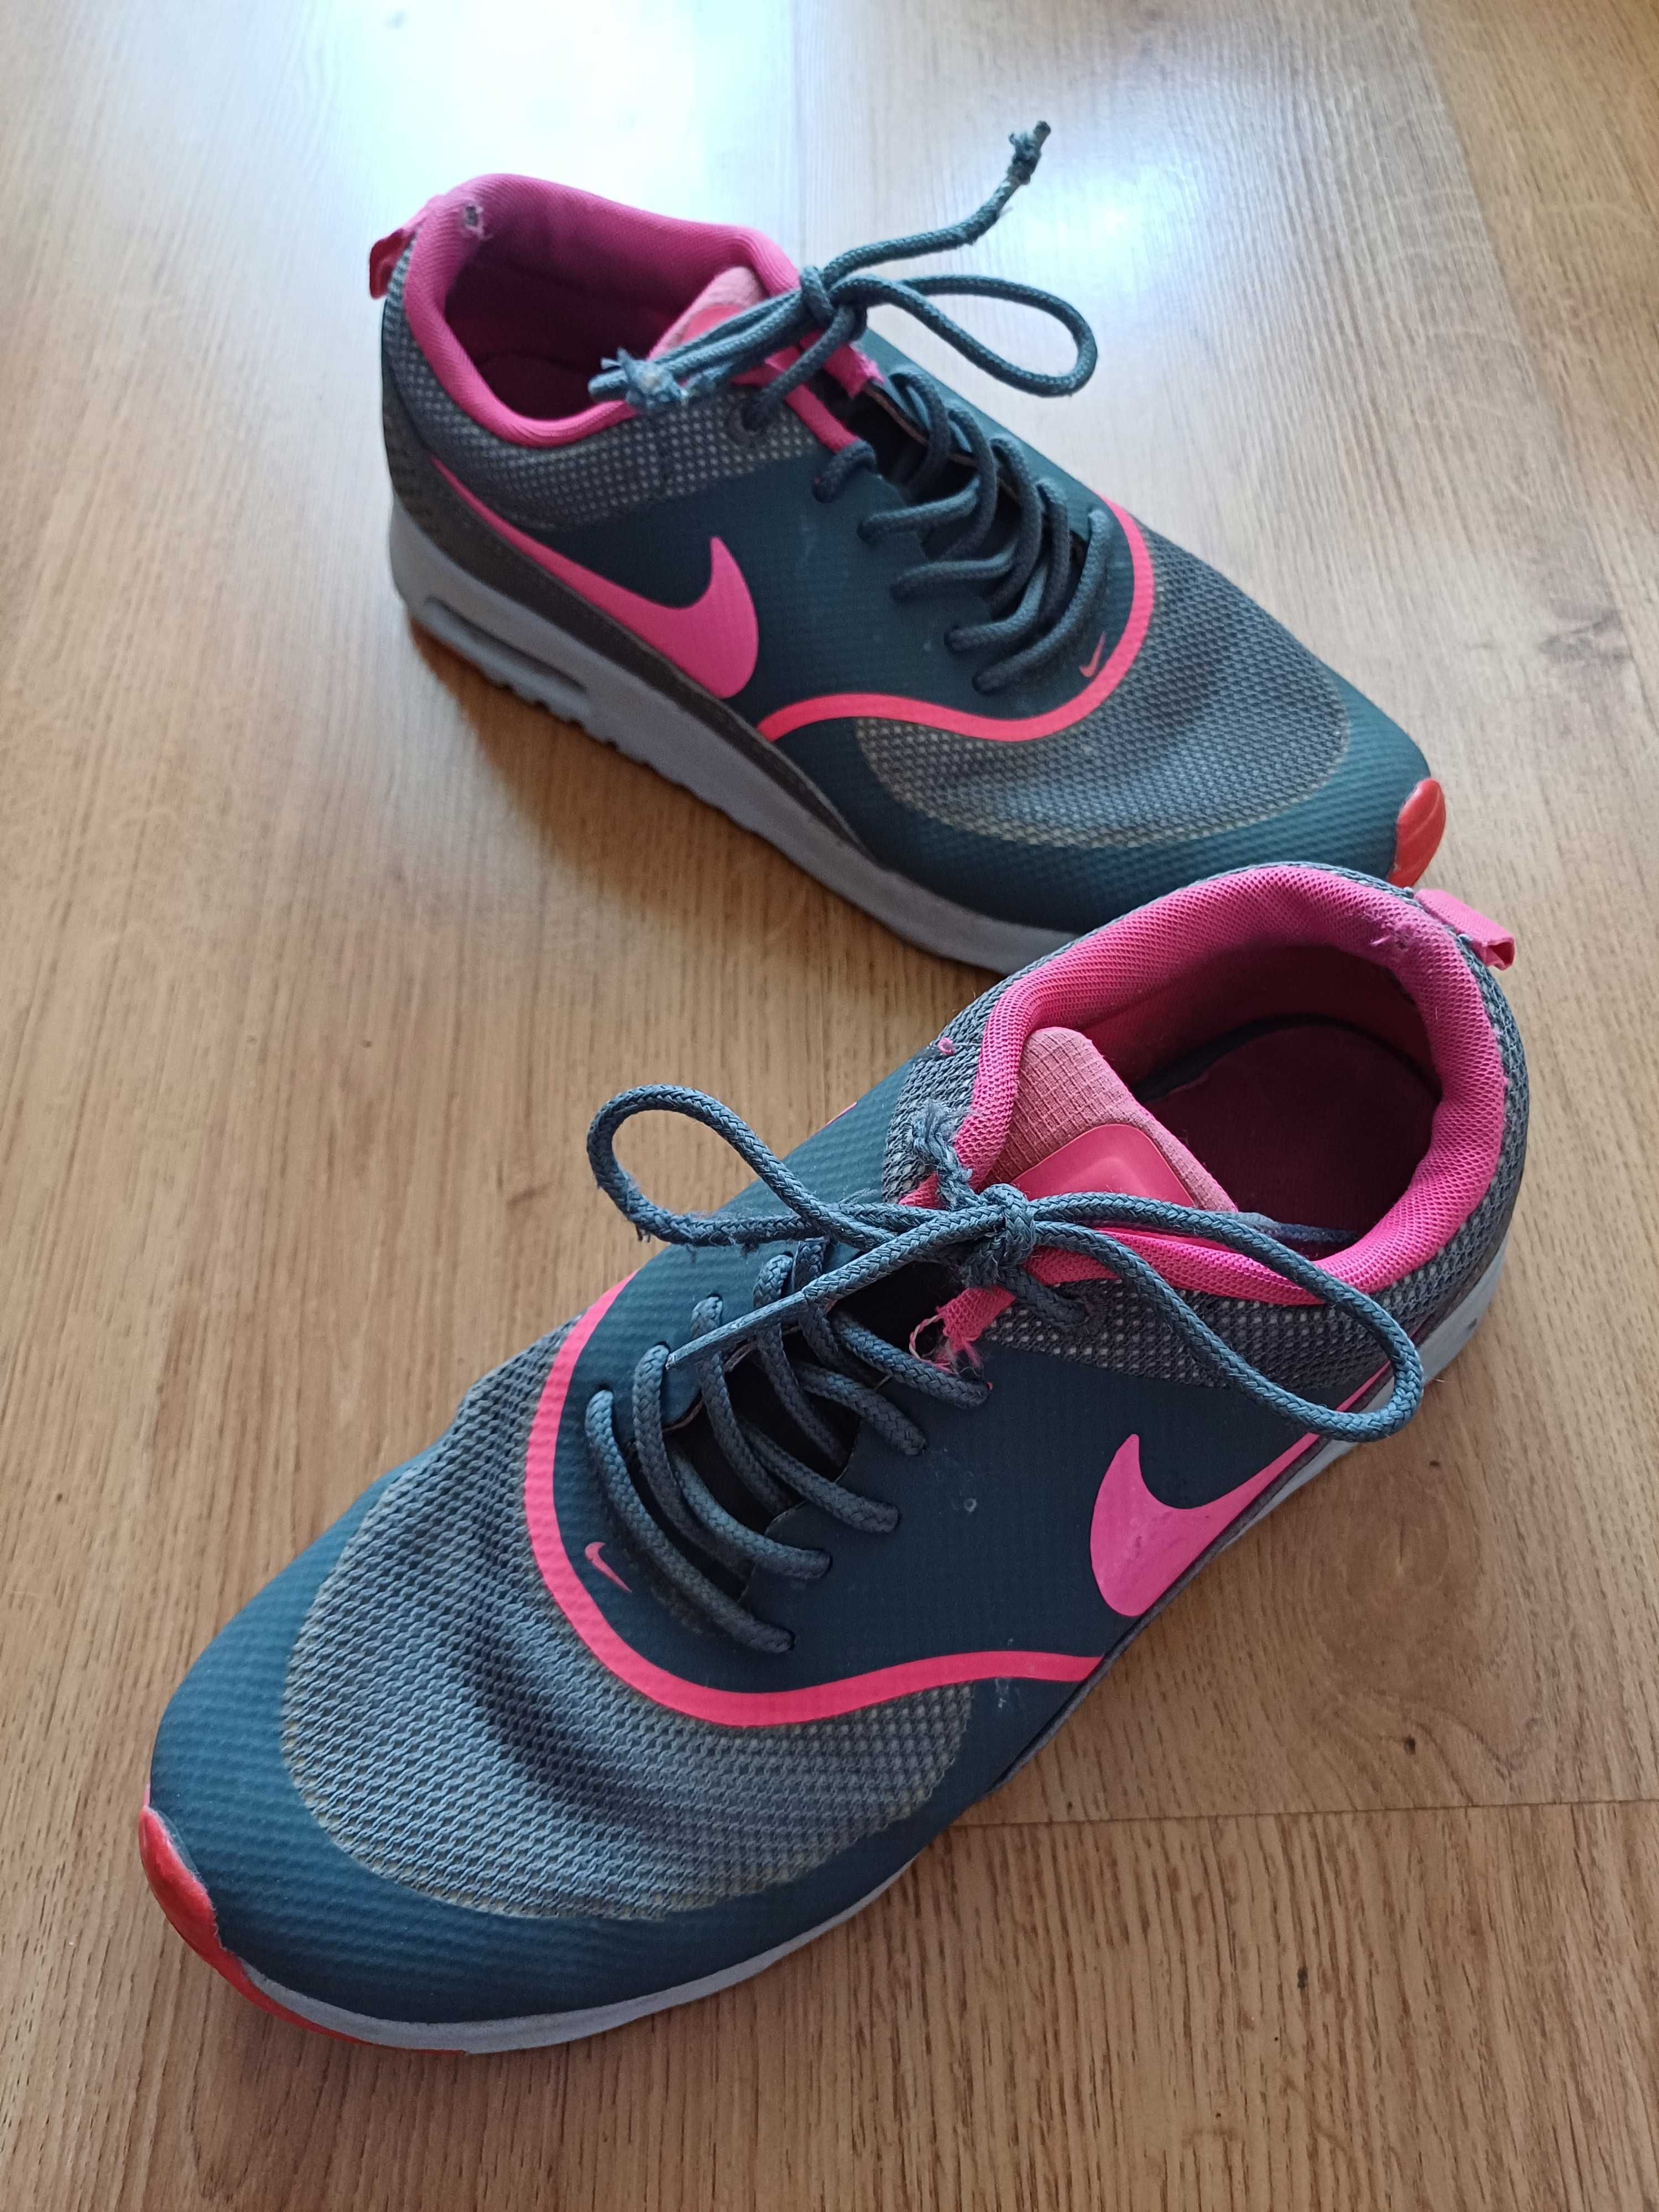 Nike adidasy roz 38